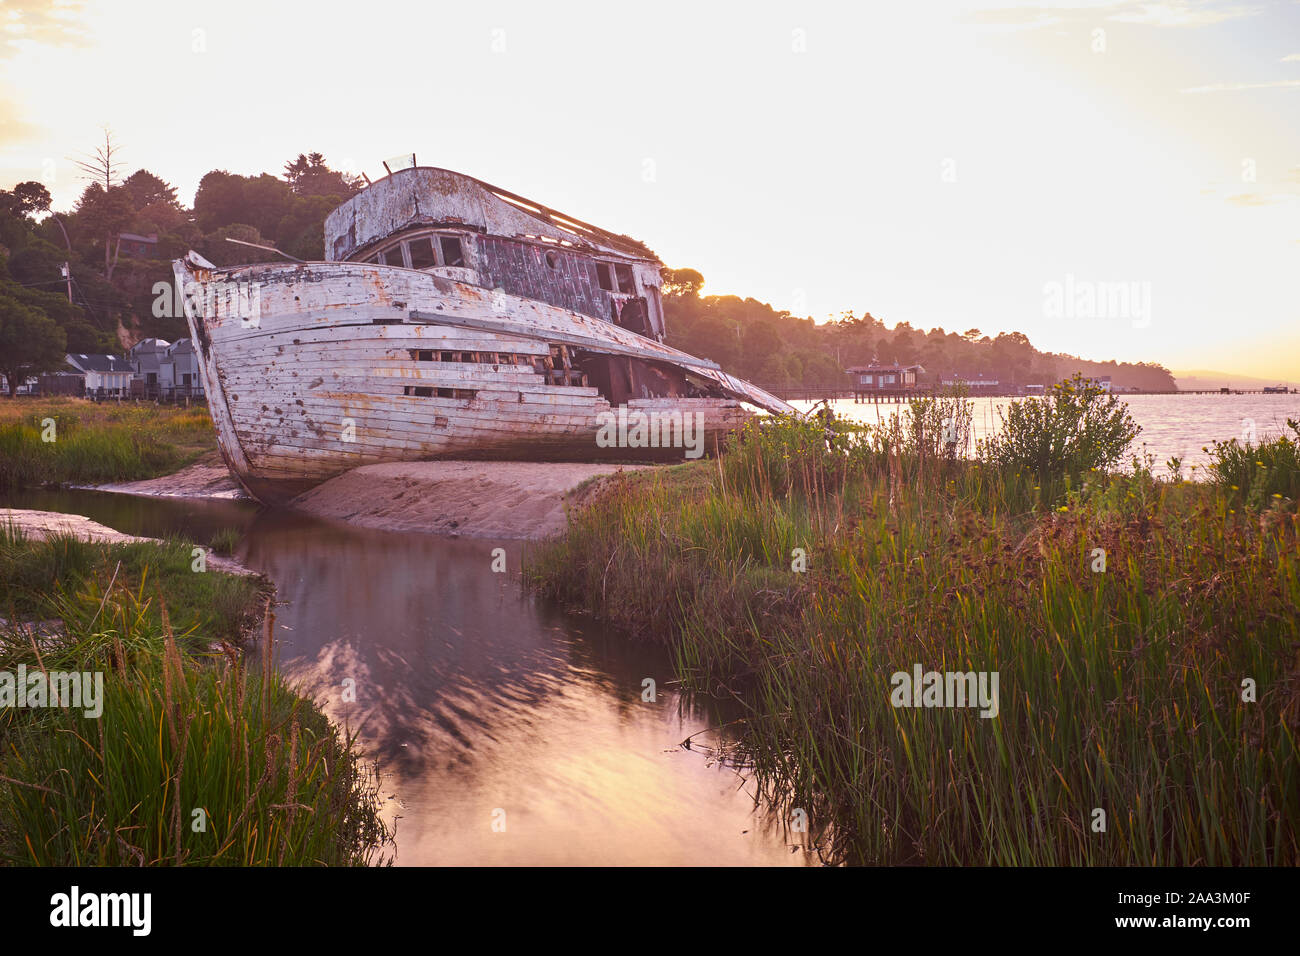 Abandoned boat at Point Reyes National Seashore, California, USA Stock Photo